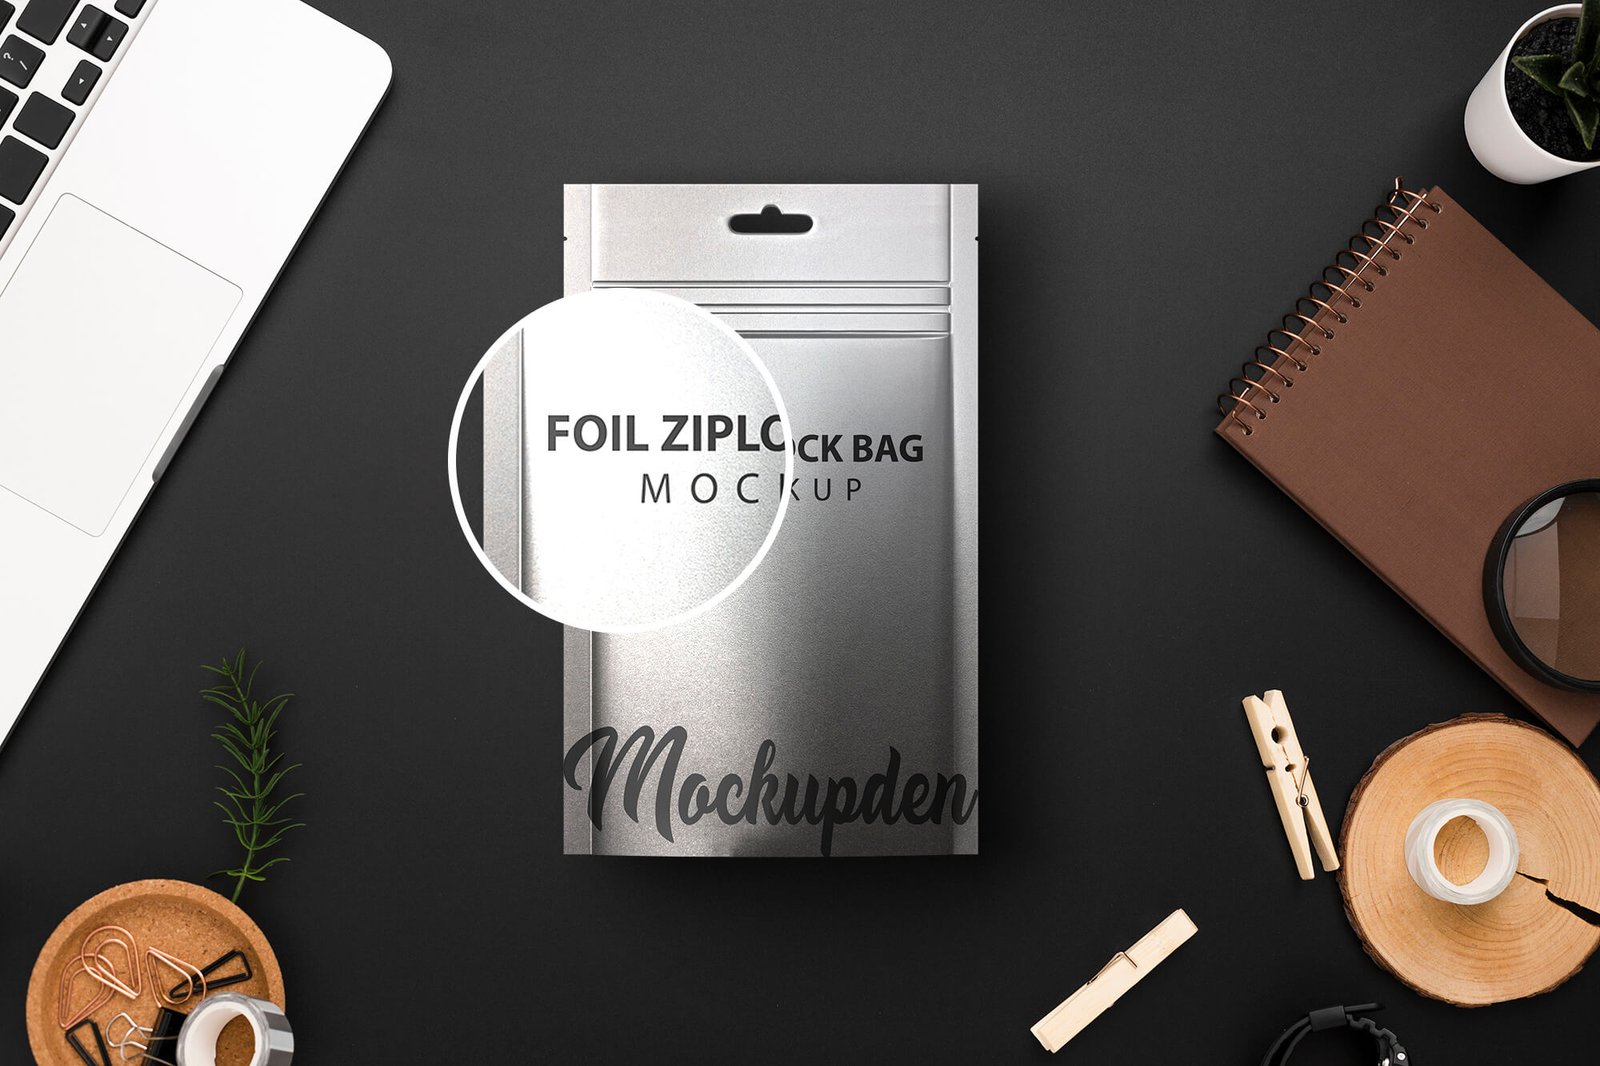 Free Foil Ziplock Bag MOckup PSD Template - Mockup Den